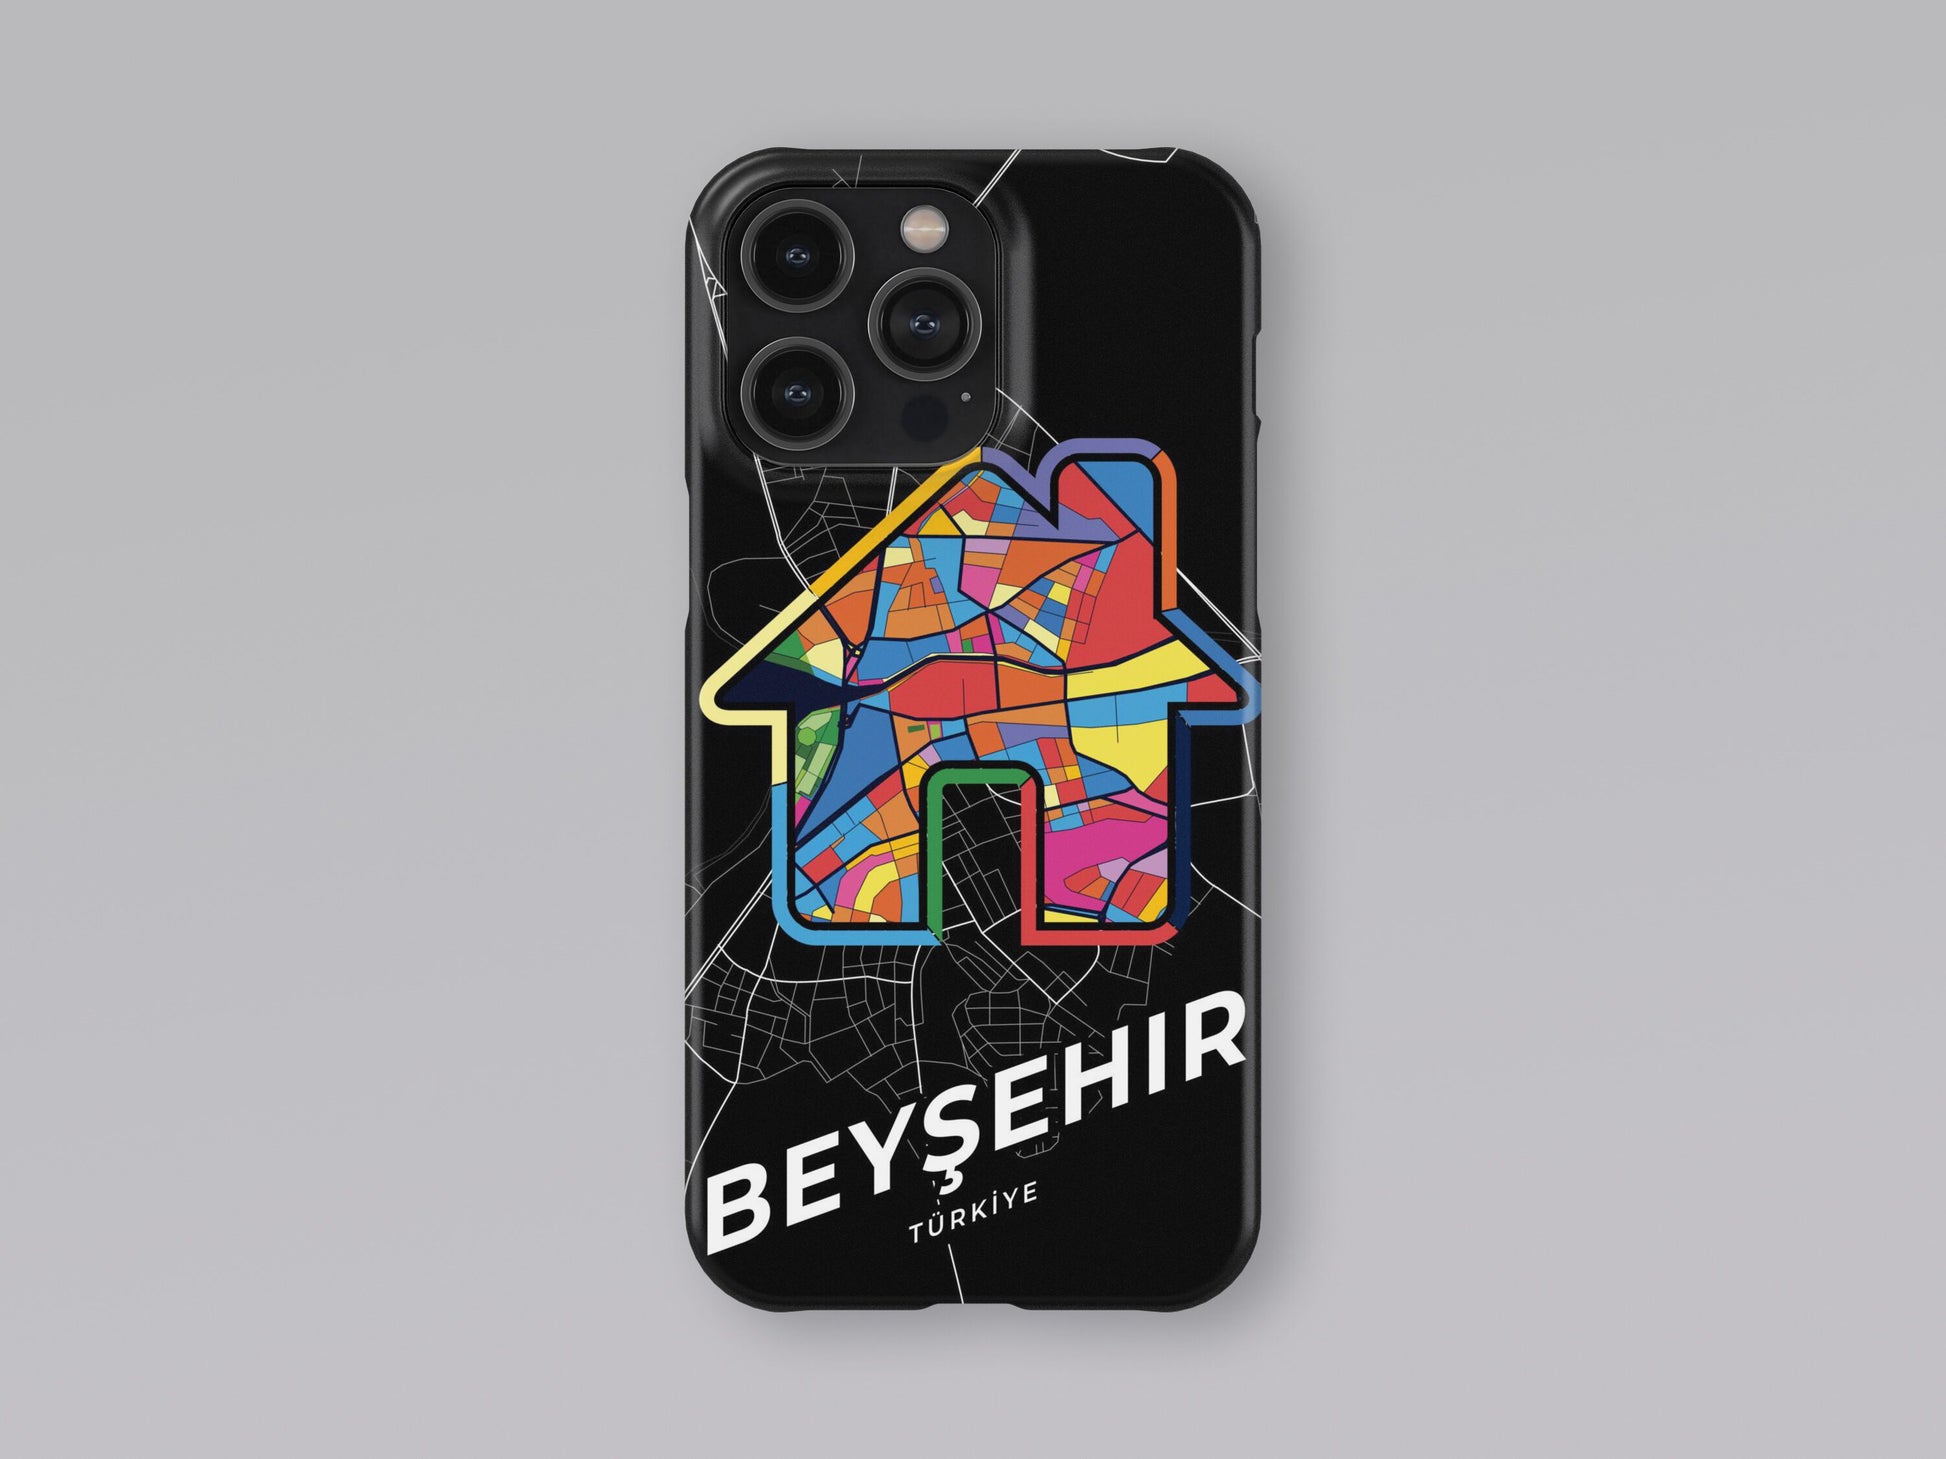 Beyşehir Turkey slim phone case with colorful icon. Birthday, wedding or housewarming gift. Couple match cases. 3